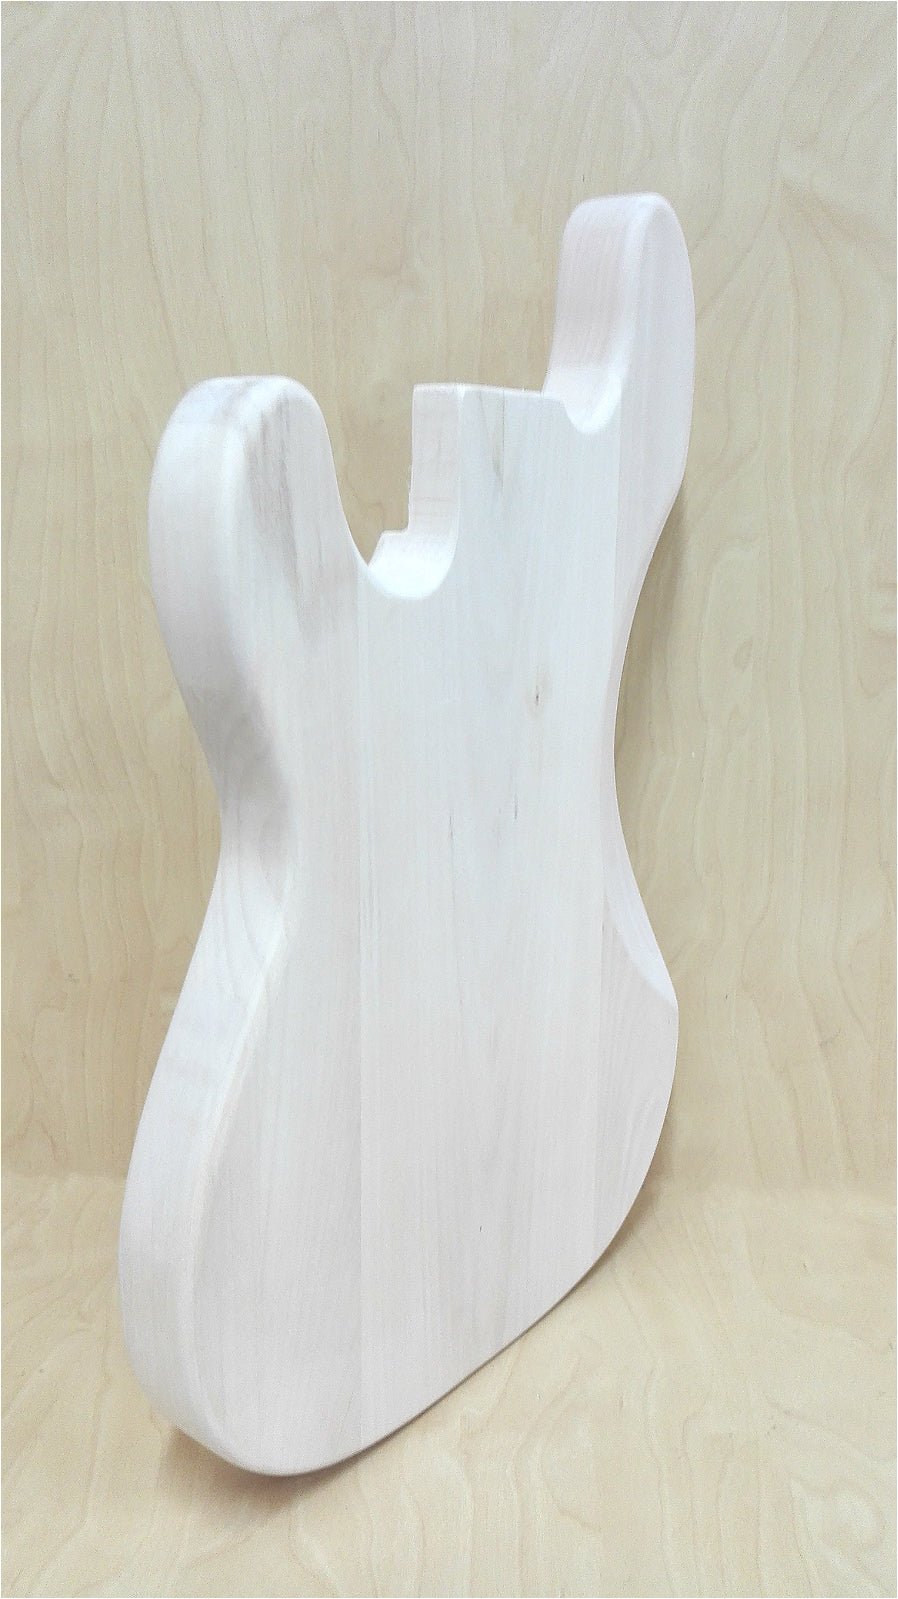 HSPB1910PLBO Solid Poplar Electric Bass Guitar Body, Pre-Drilled, Polished